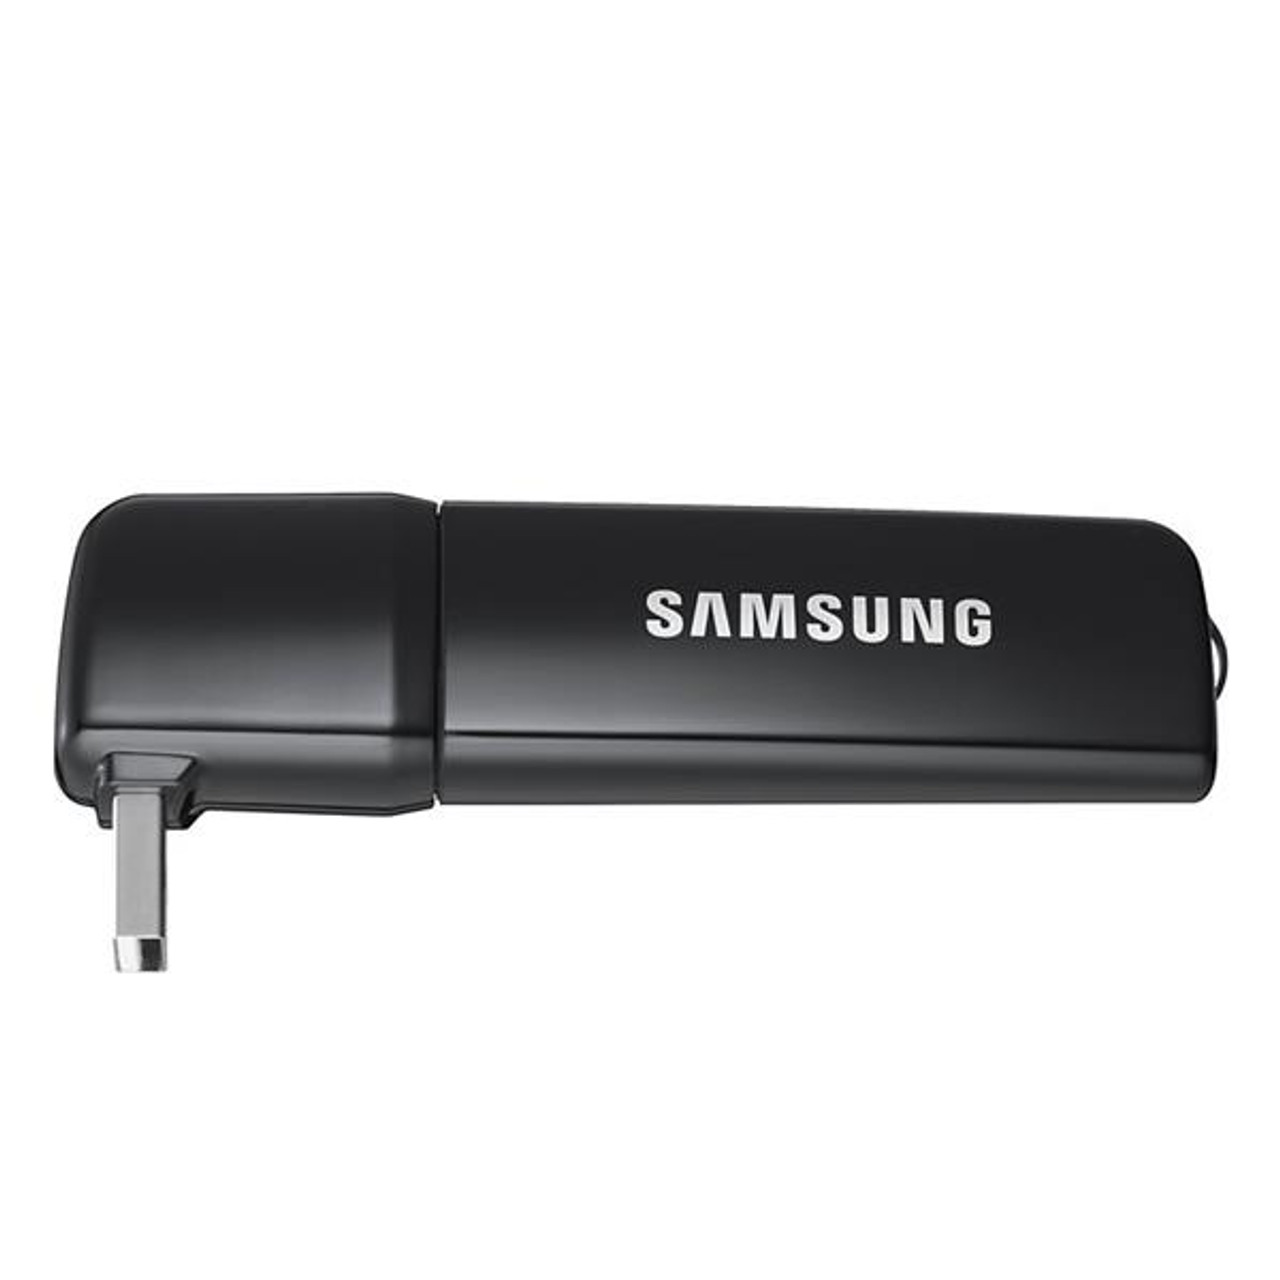 Samsung wireless adapter купить. Wis12 адаптер. Samsung Wireless lan Adapter Wi-Fi. Samsung wis12abgnx. Внешний WIFI адаптер для телевизора Samsung.